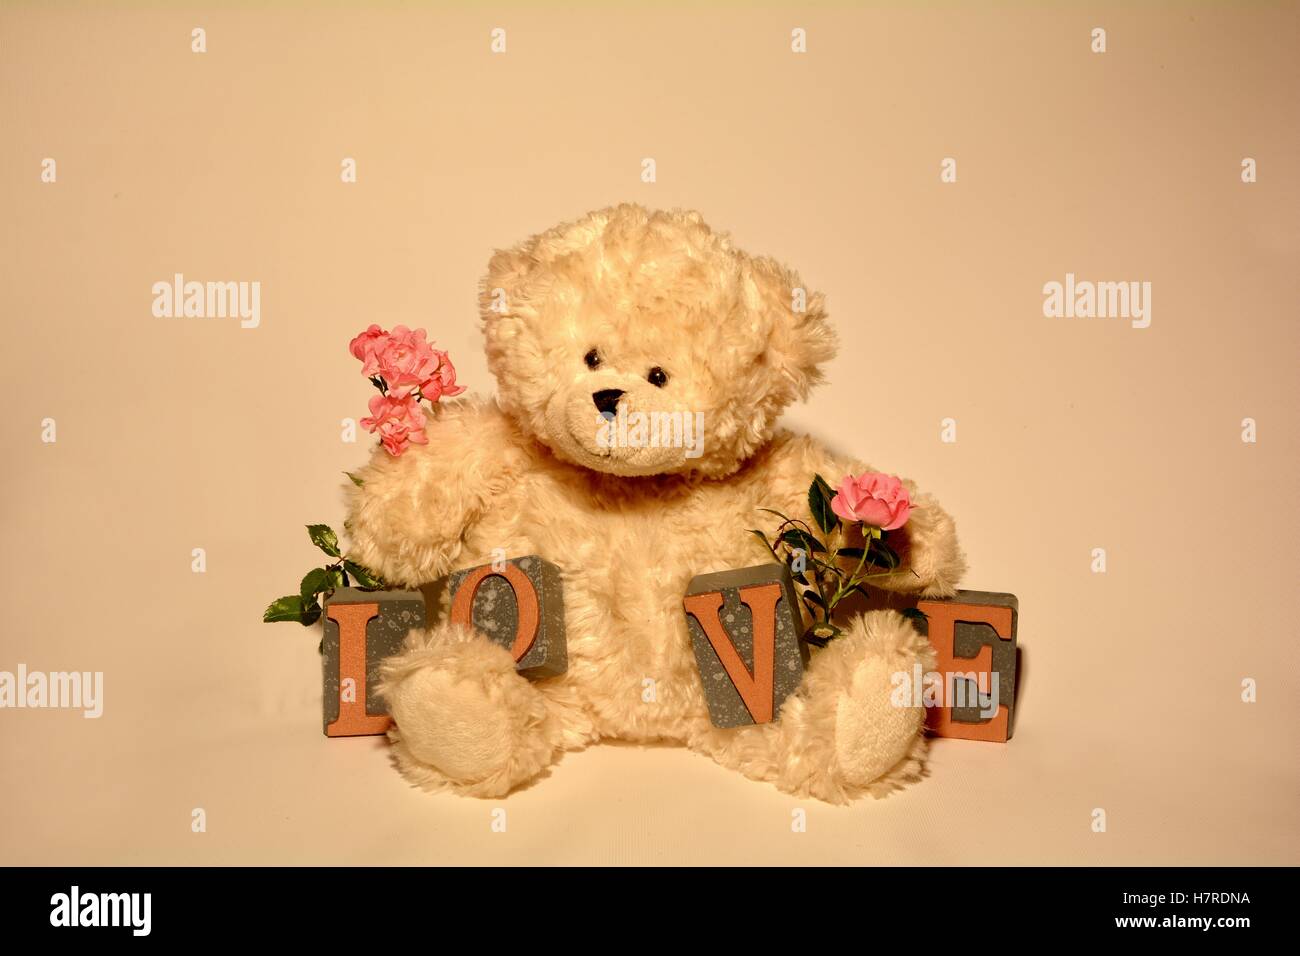 Gift Present Birthday Valentine I LOVE FREYA NEW Teddy Bear Cute Cuddly